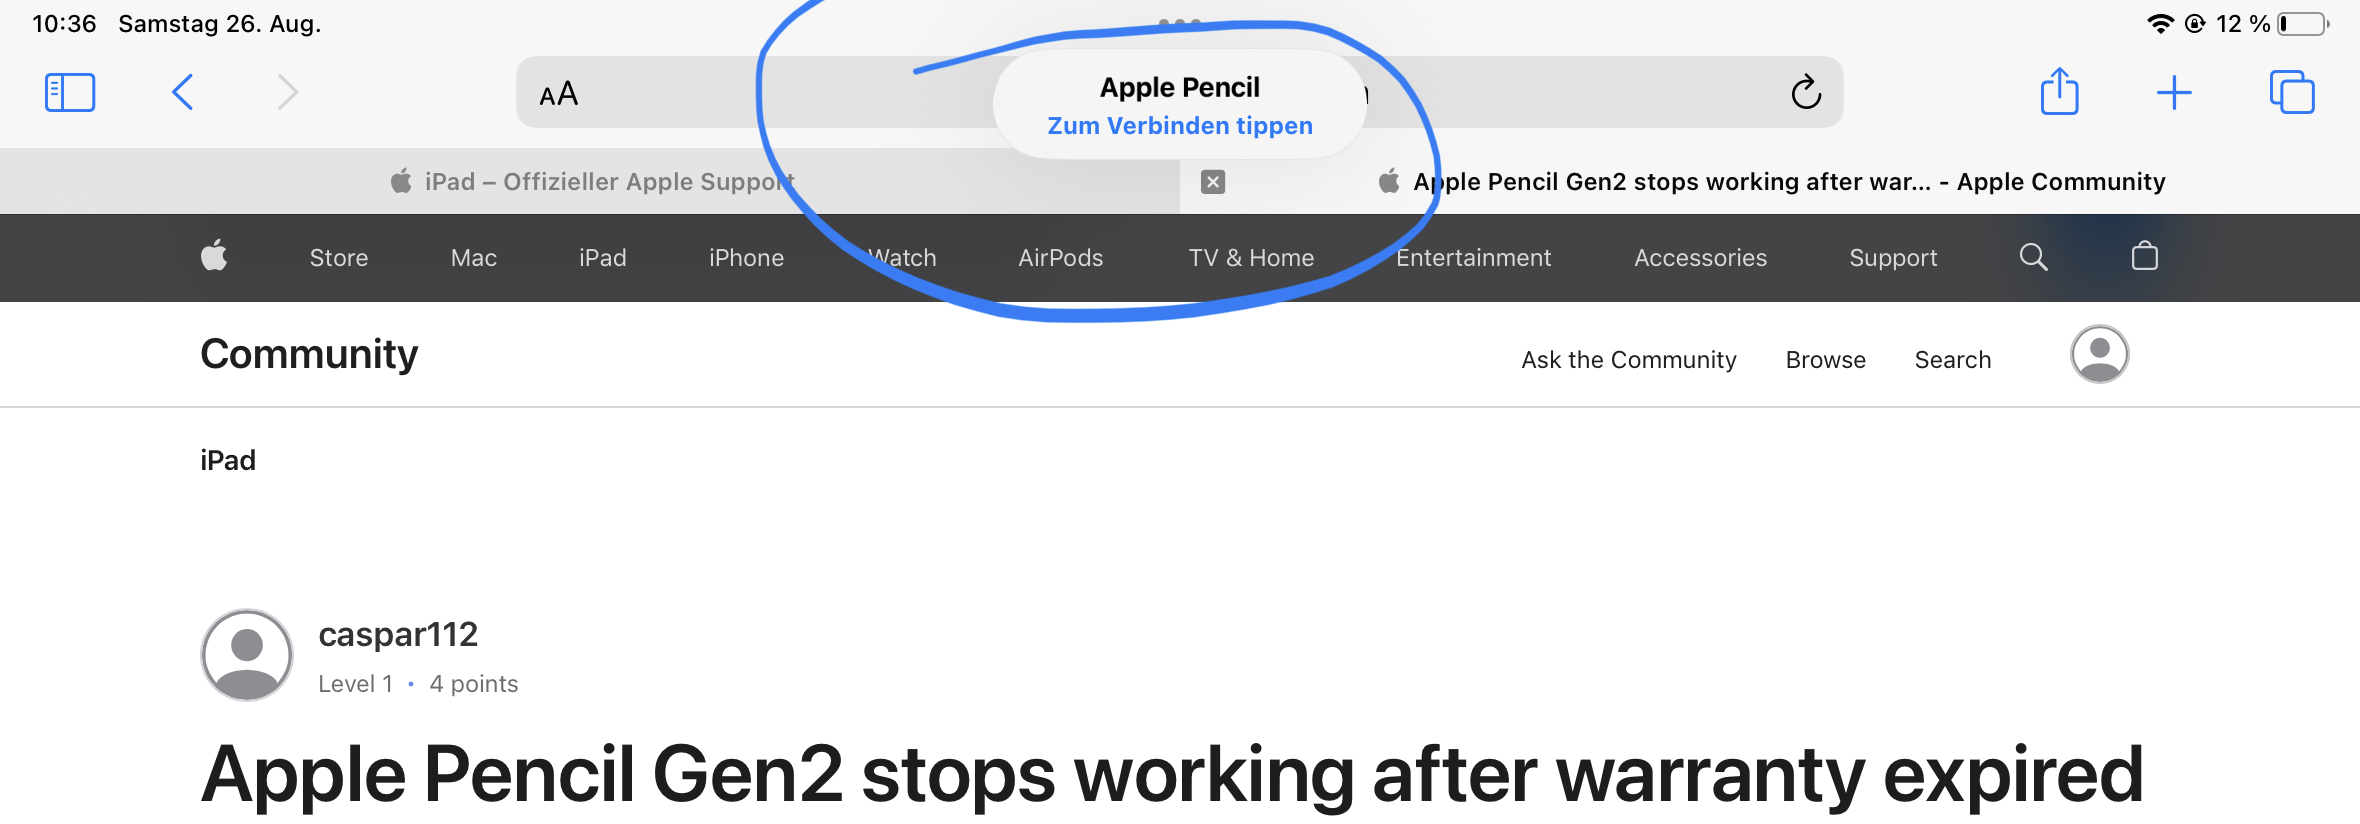 Apple Pencil Gen2 stops working after war… - Apple Community